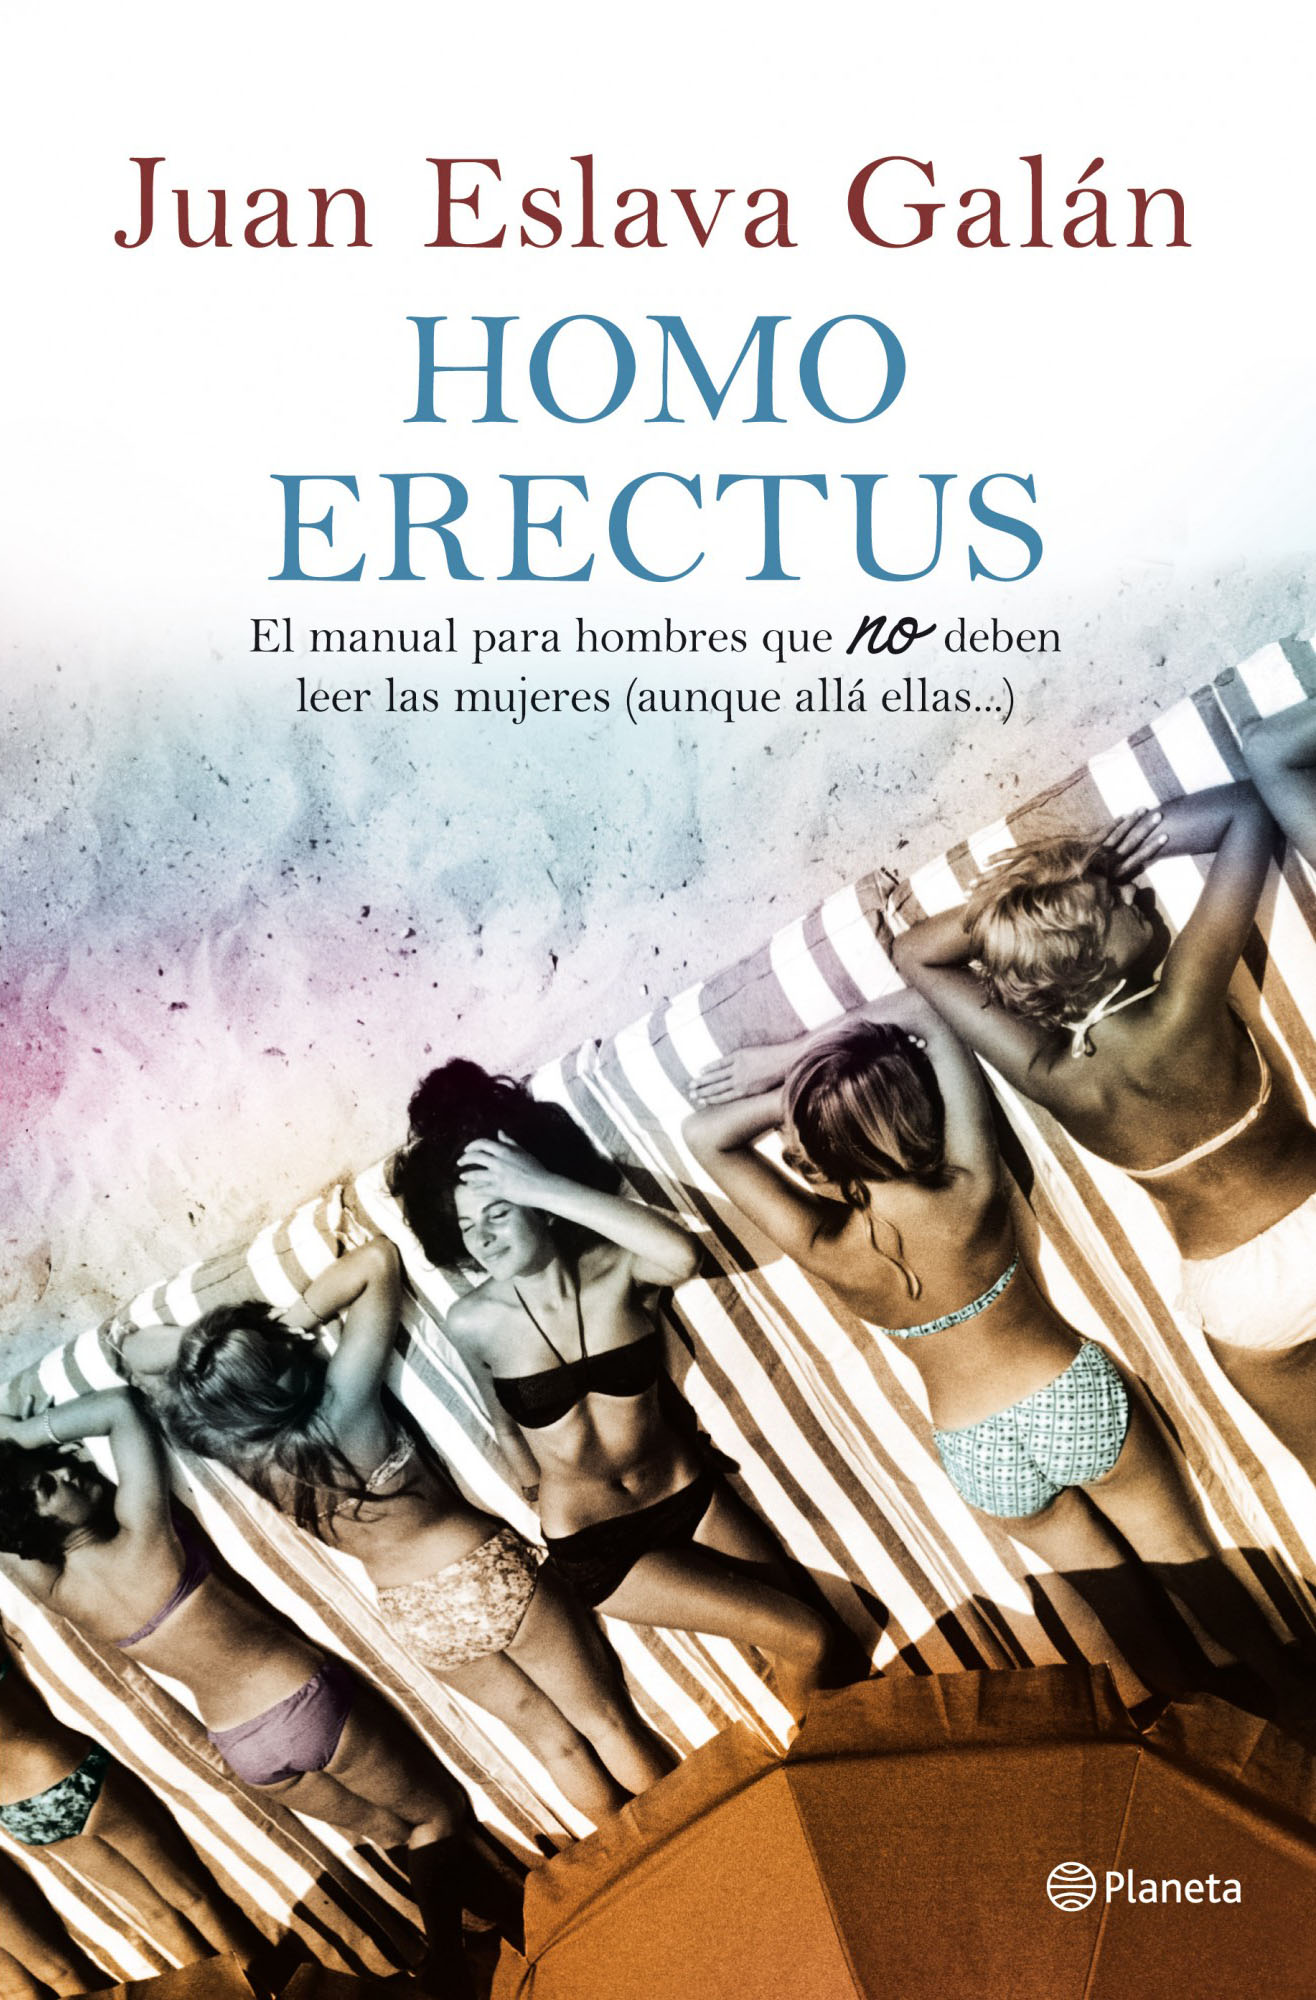 Juan Eslava Galán - Homo Erectus